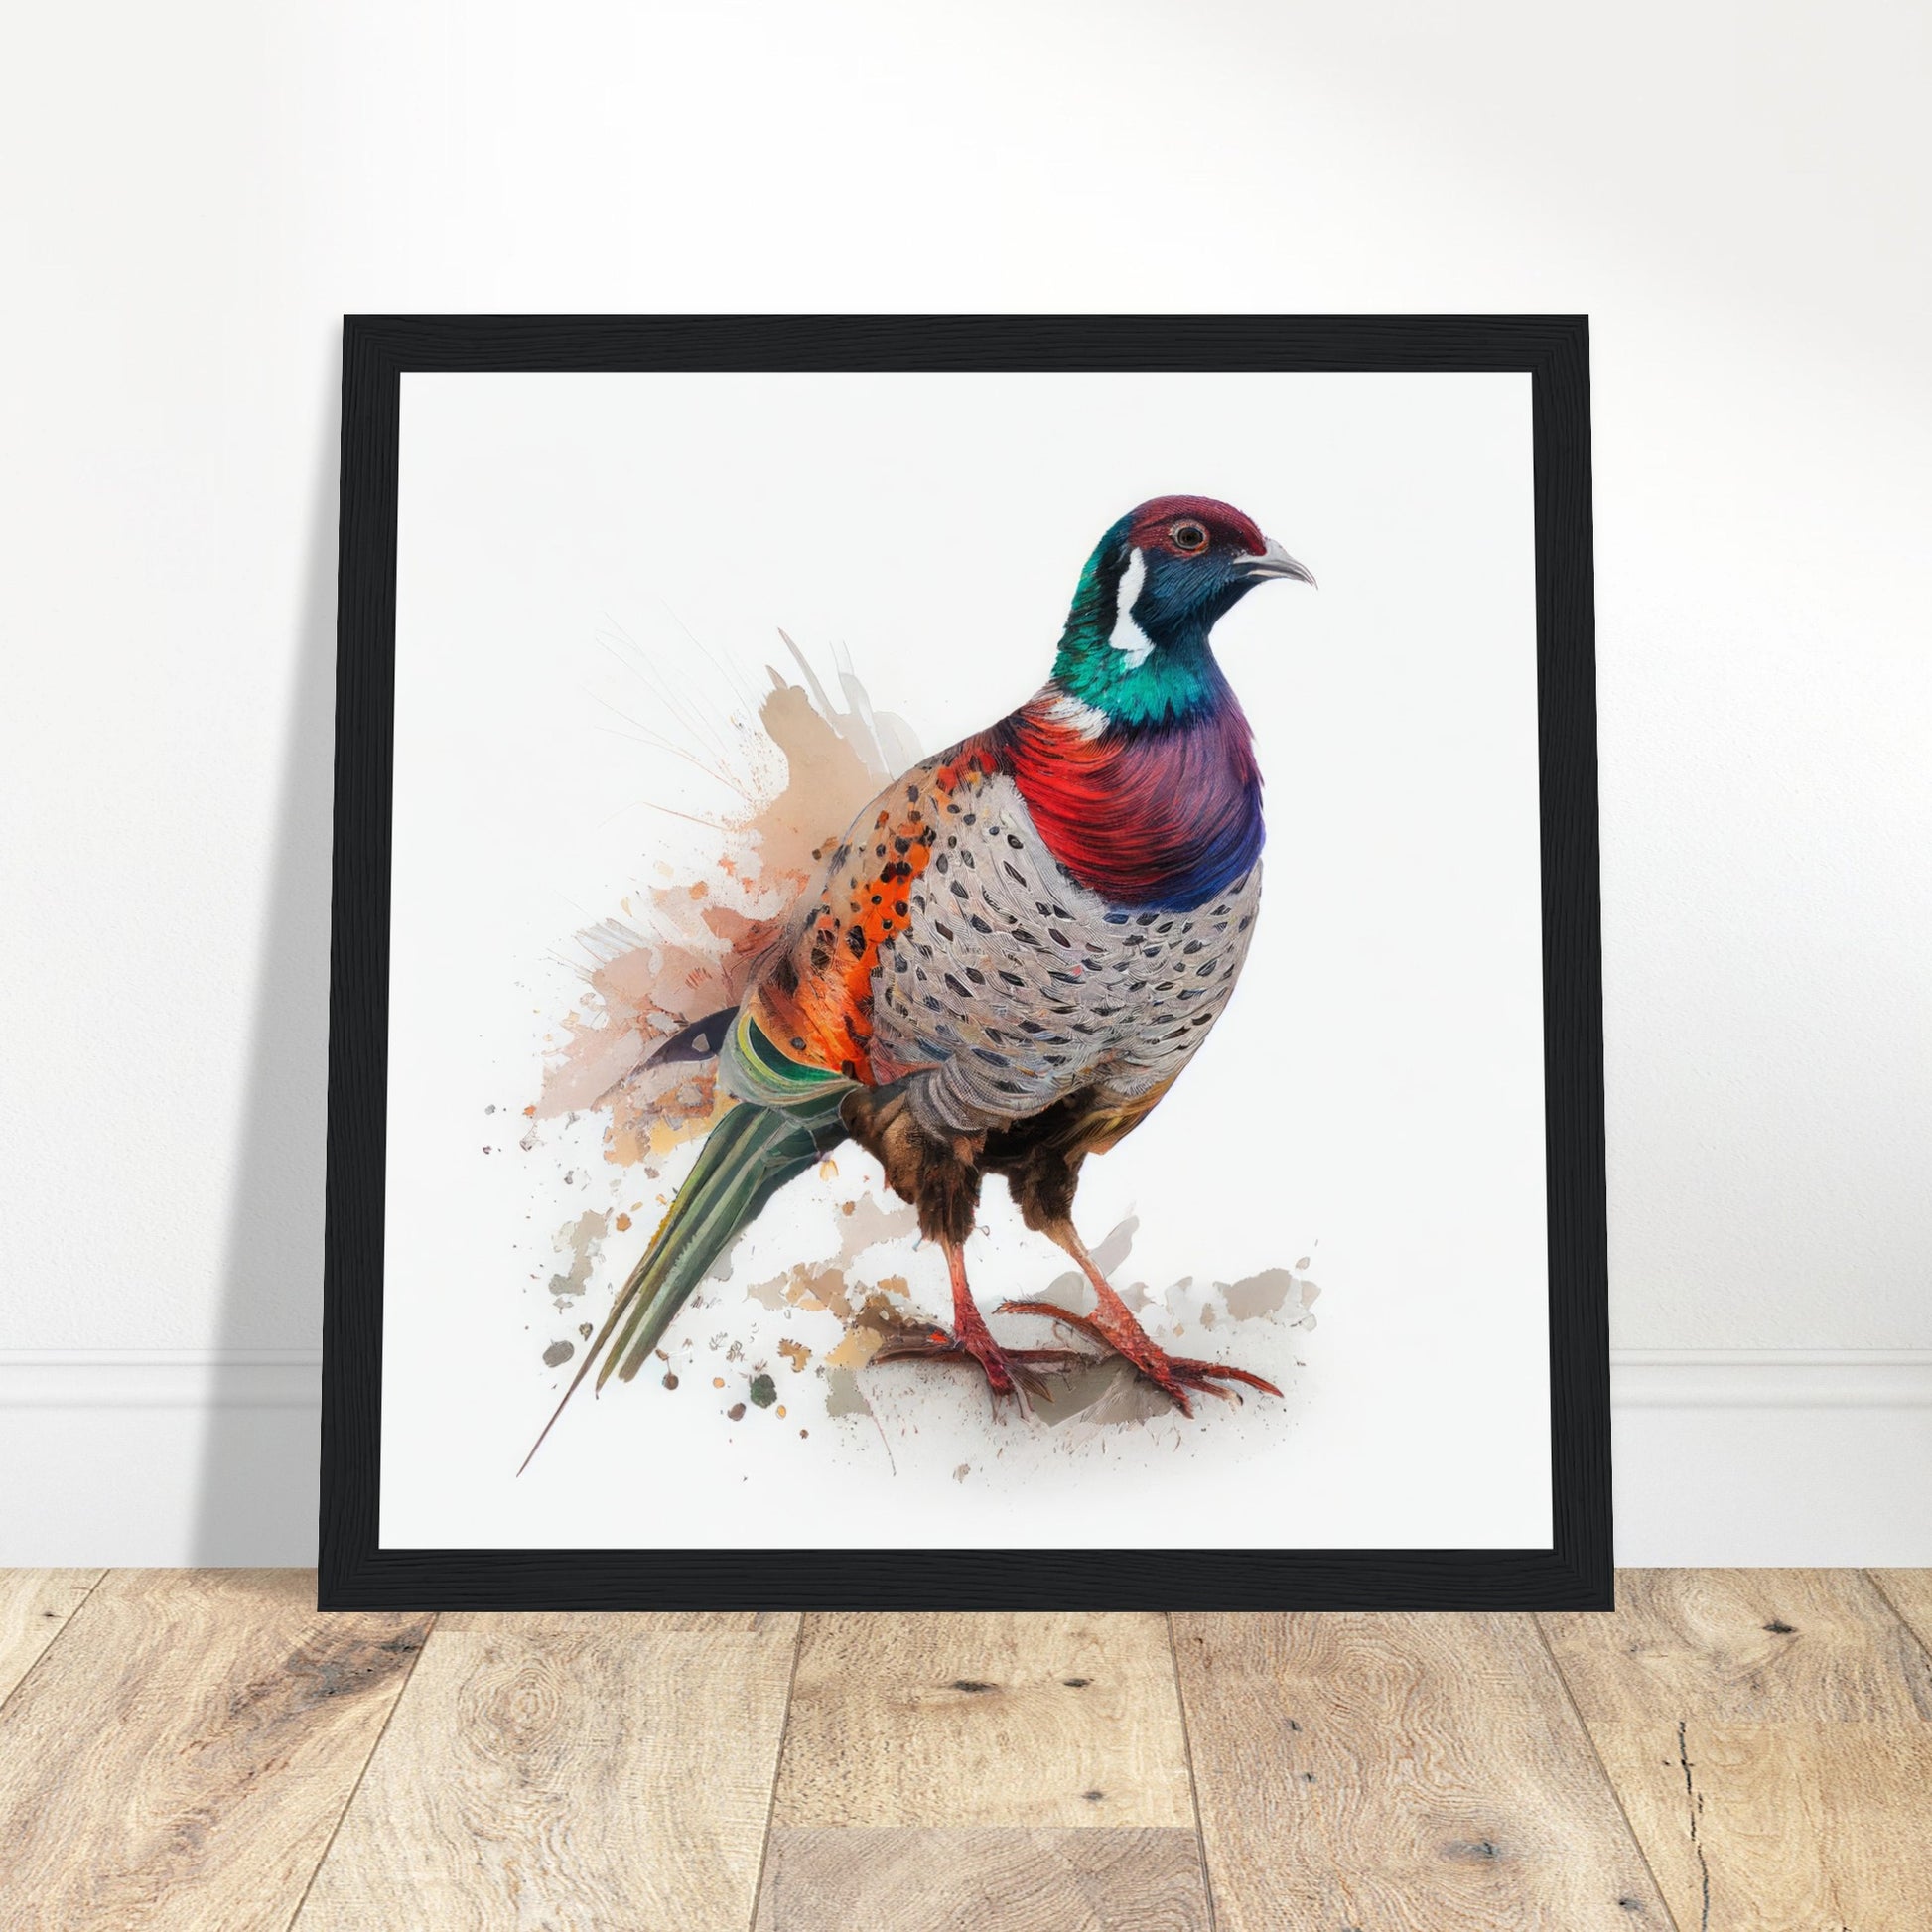 Pheasant Artwork - Print Room Ltd White frame 30x30 cm / 12x12"